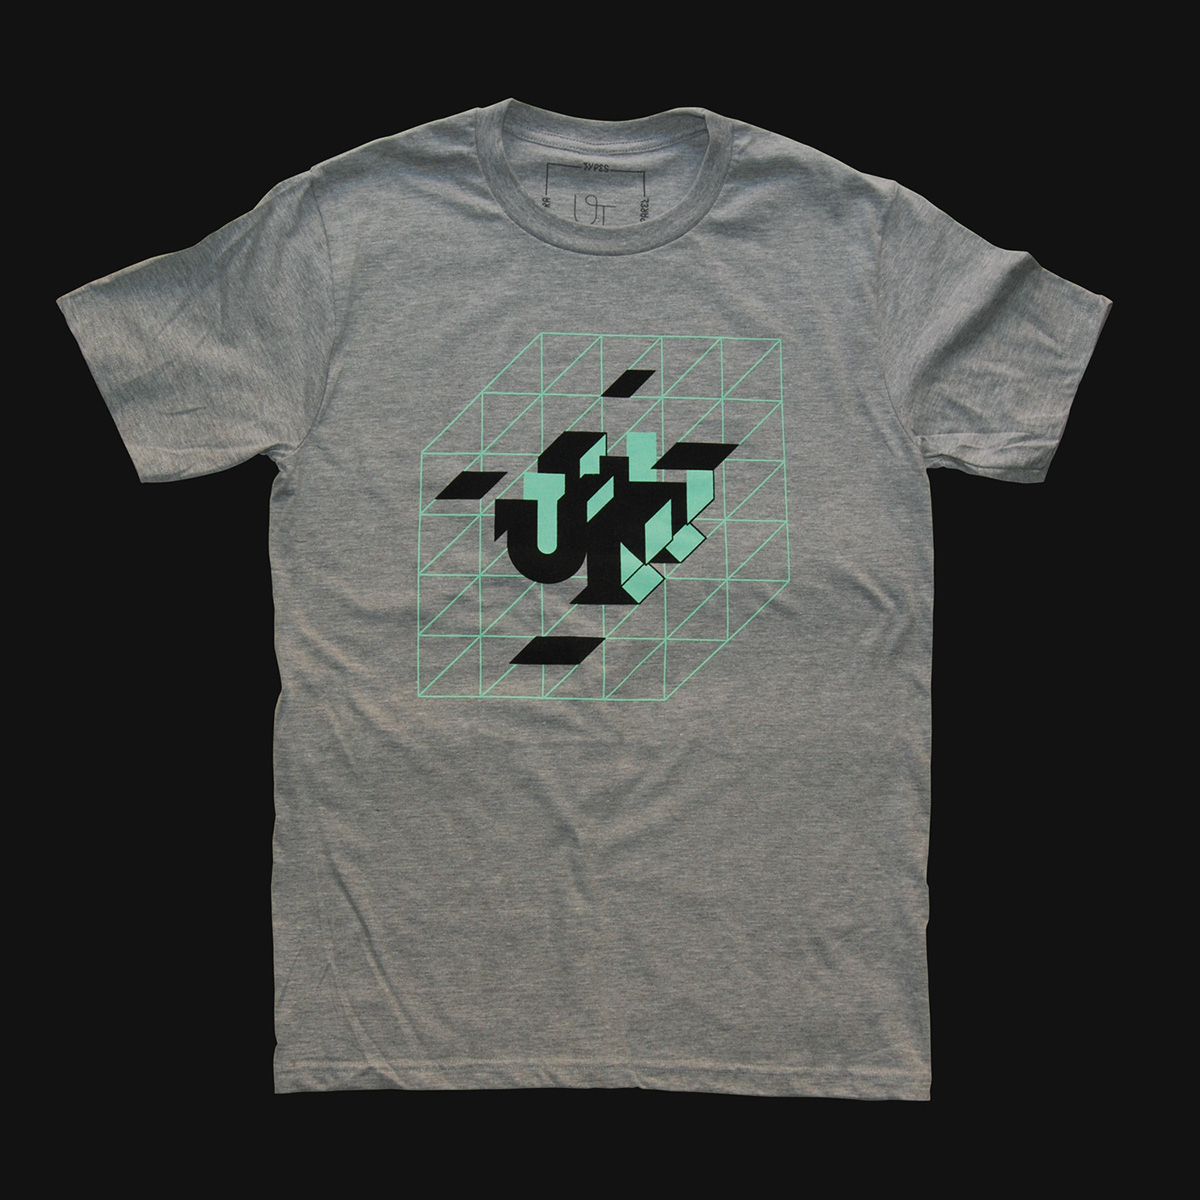 tees type typographic shirts t-shirt ultra types UT